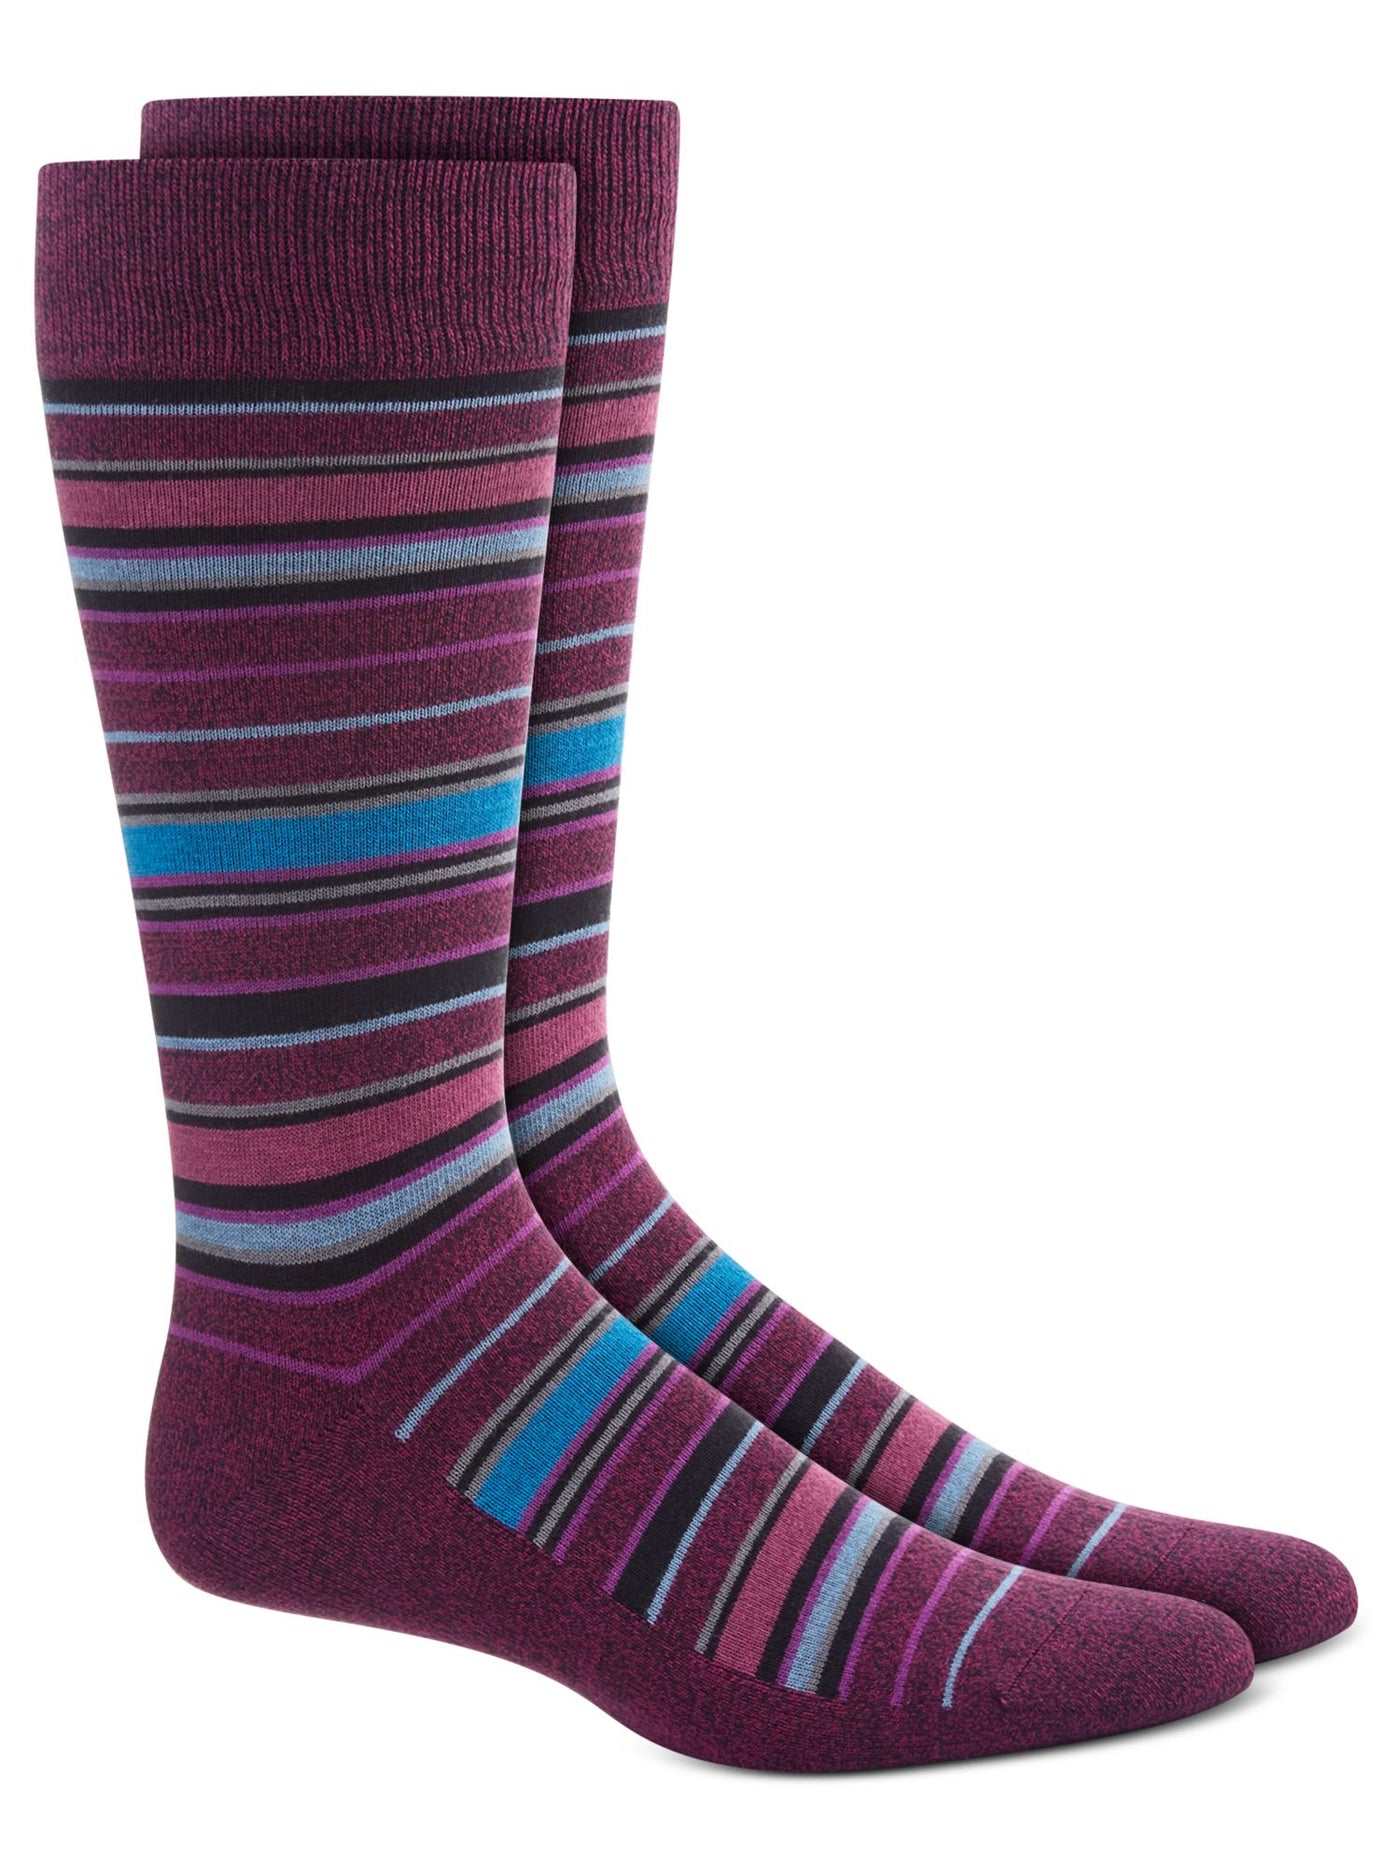 ALFANI Mens Purple Rayon Striped Moisture Wicking Casual Crew Socks 7-12